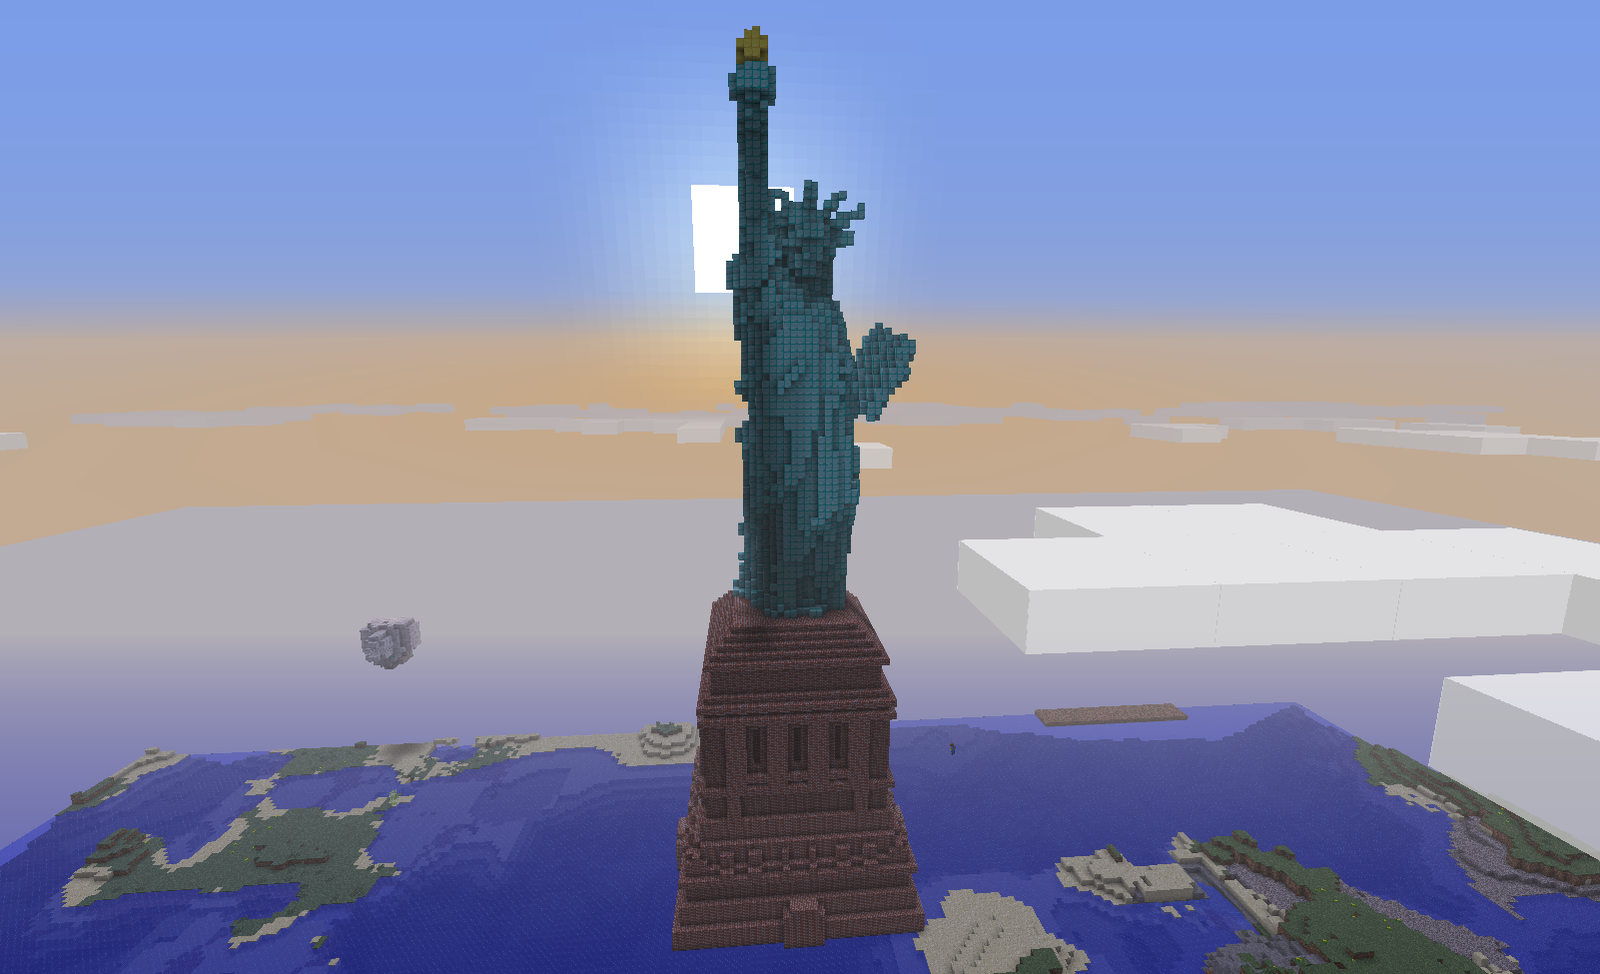 Statue of Liberty - 1. 